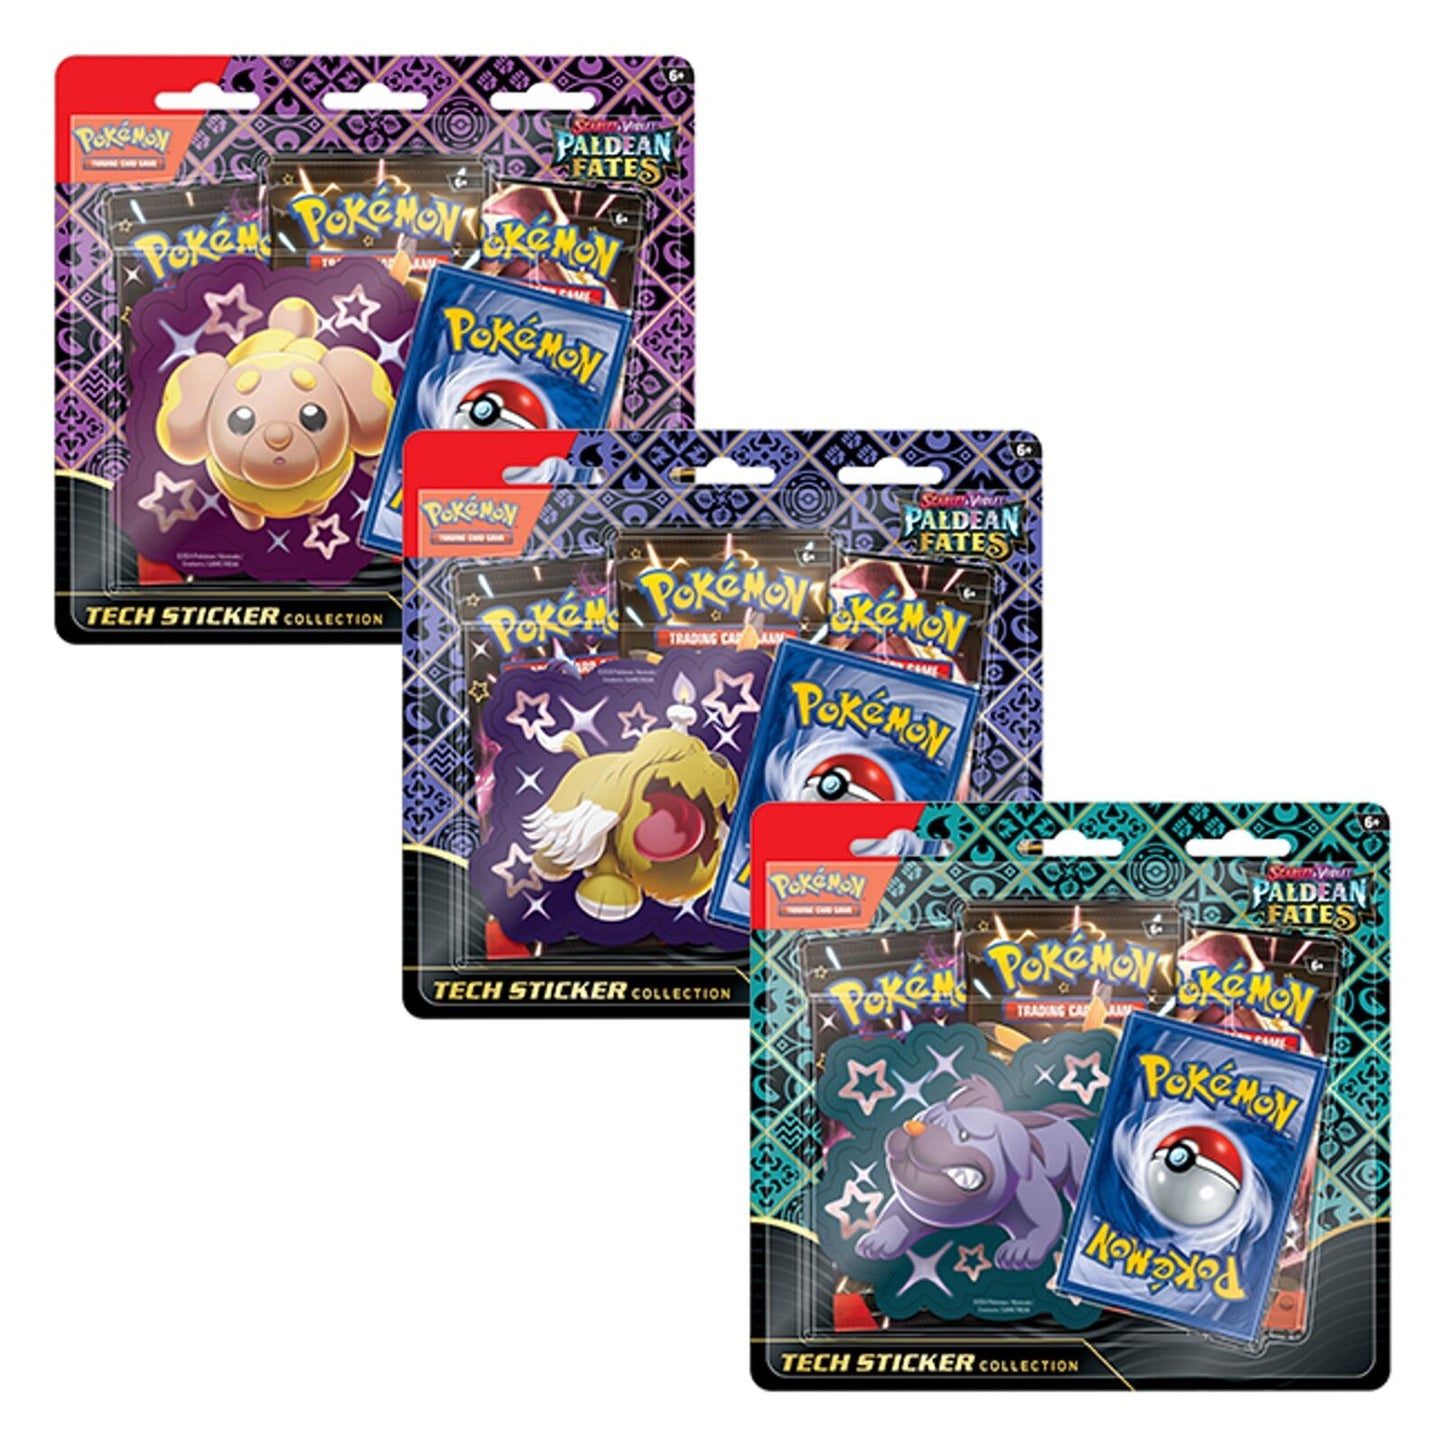 Pokemon TCG: Scarlet & Violet - Paldean Fates Tech Sticker Collection - Maschiff